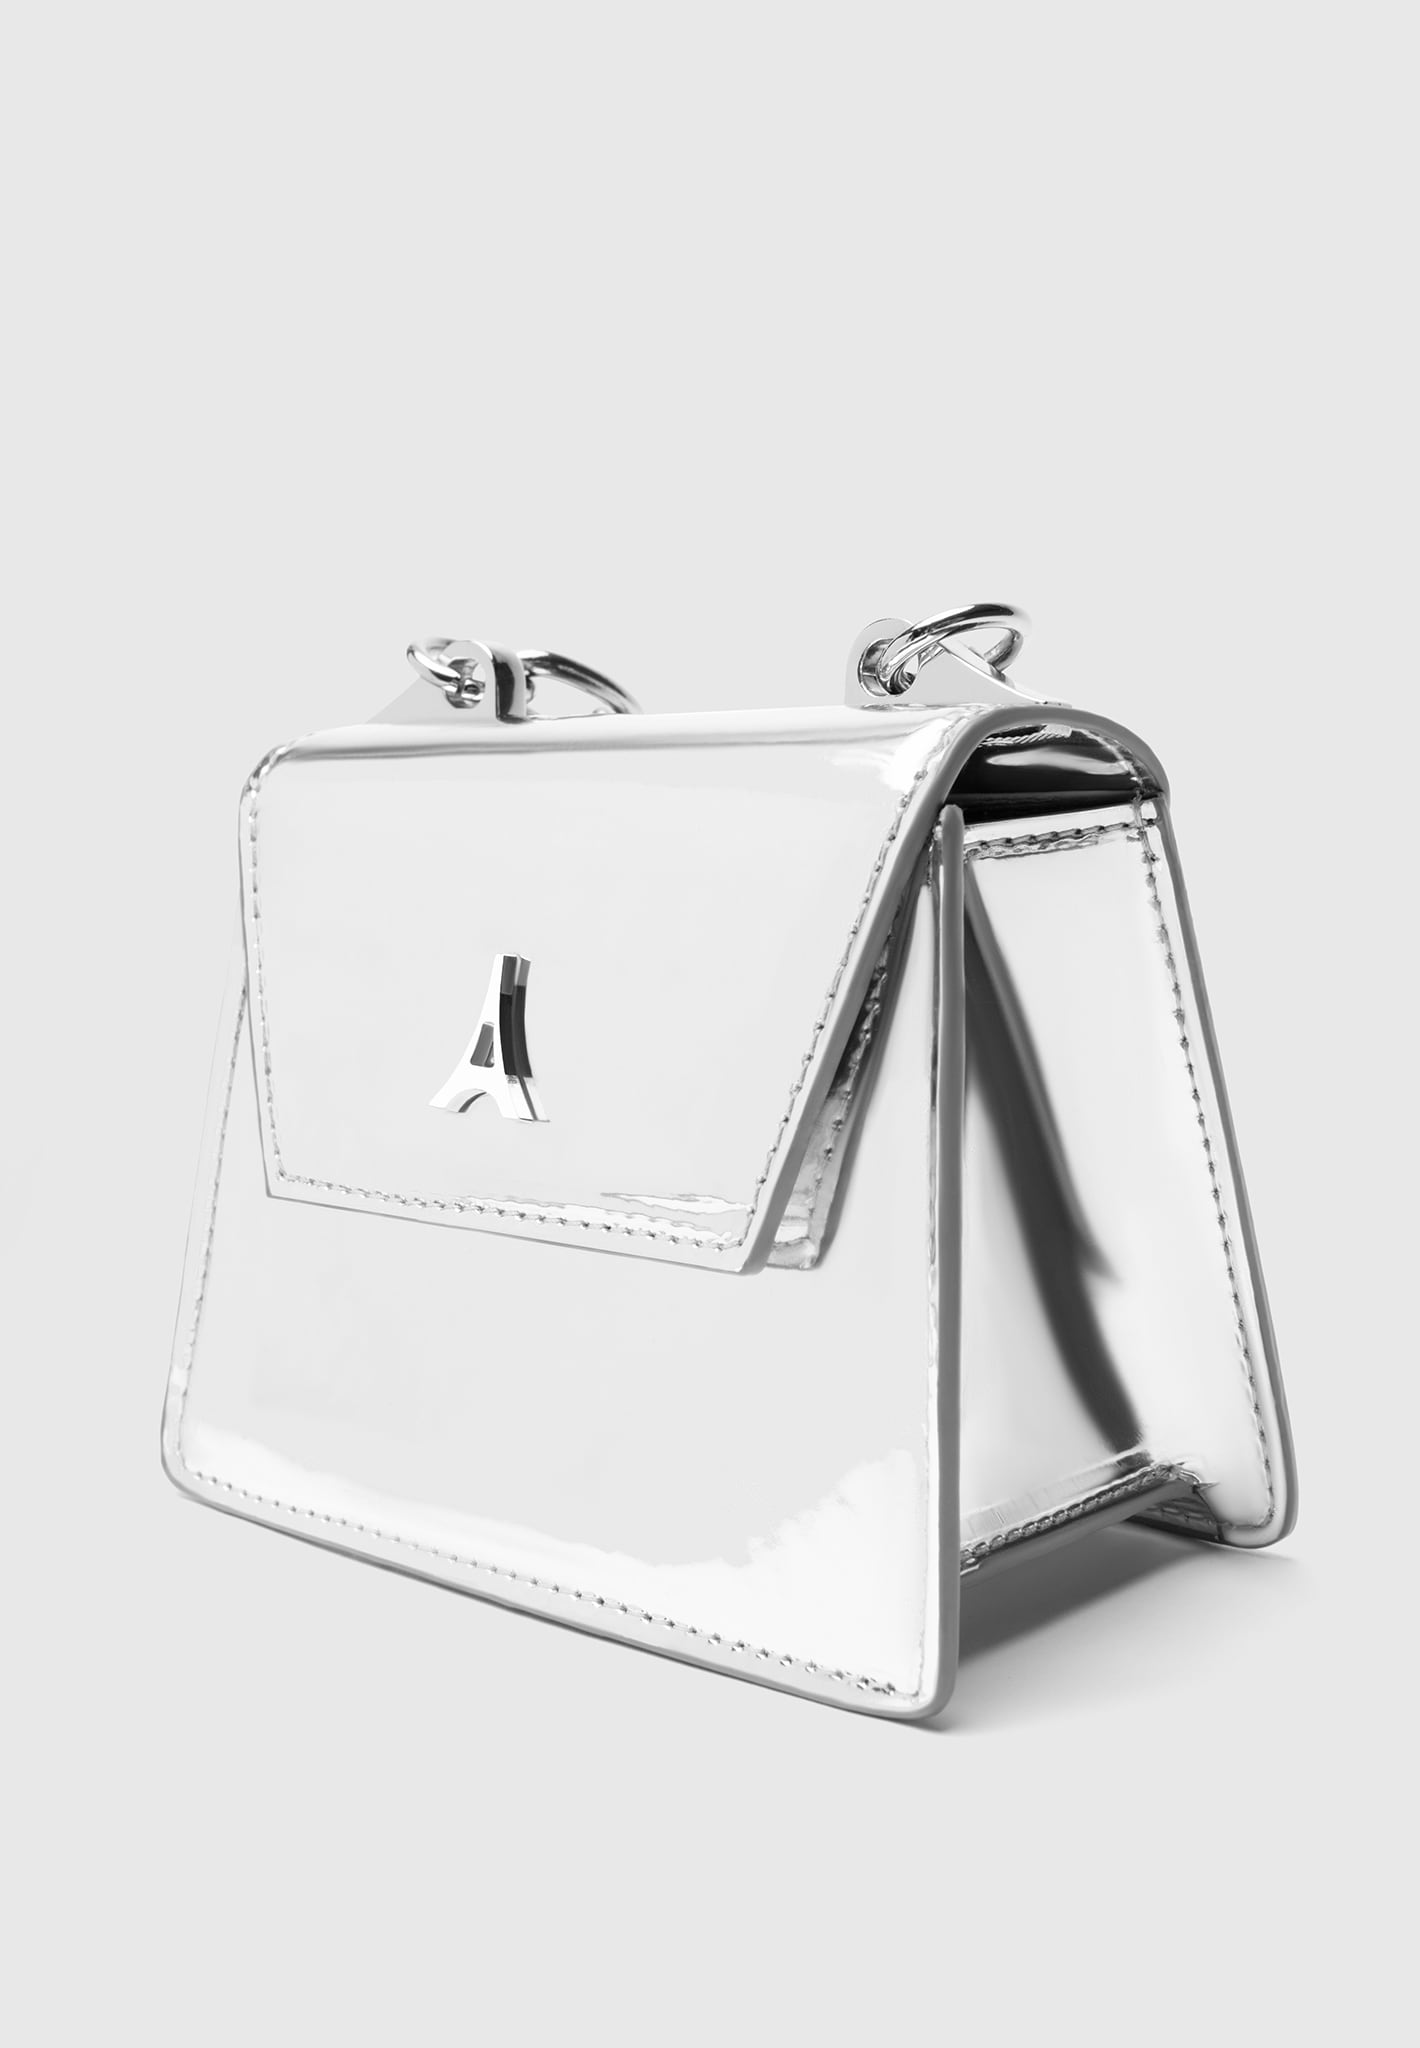 miniature-bag-silver-chrome-1